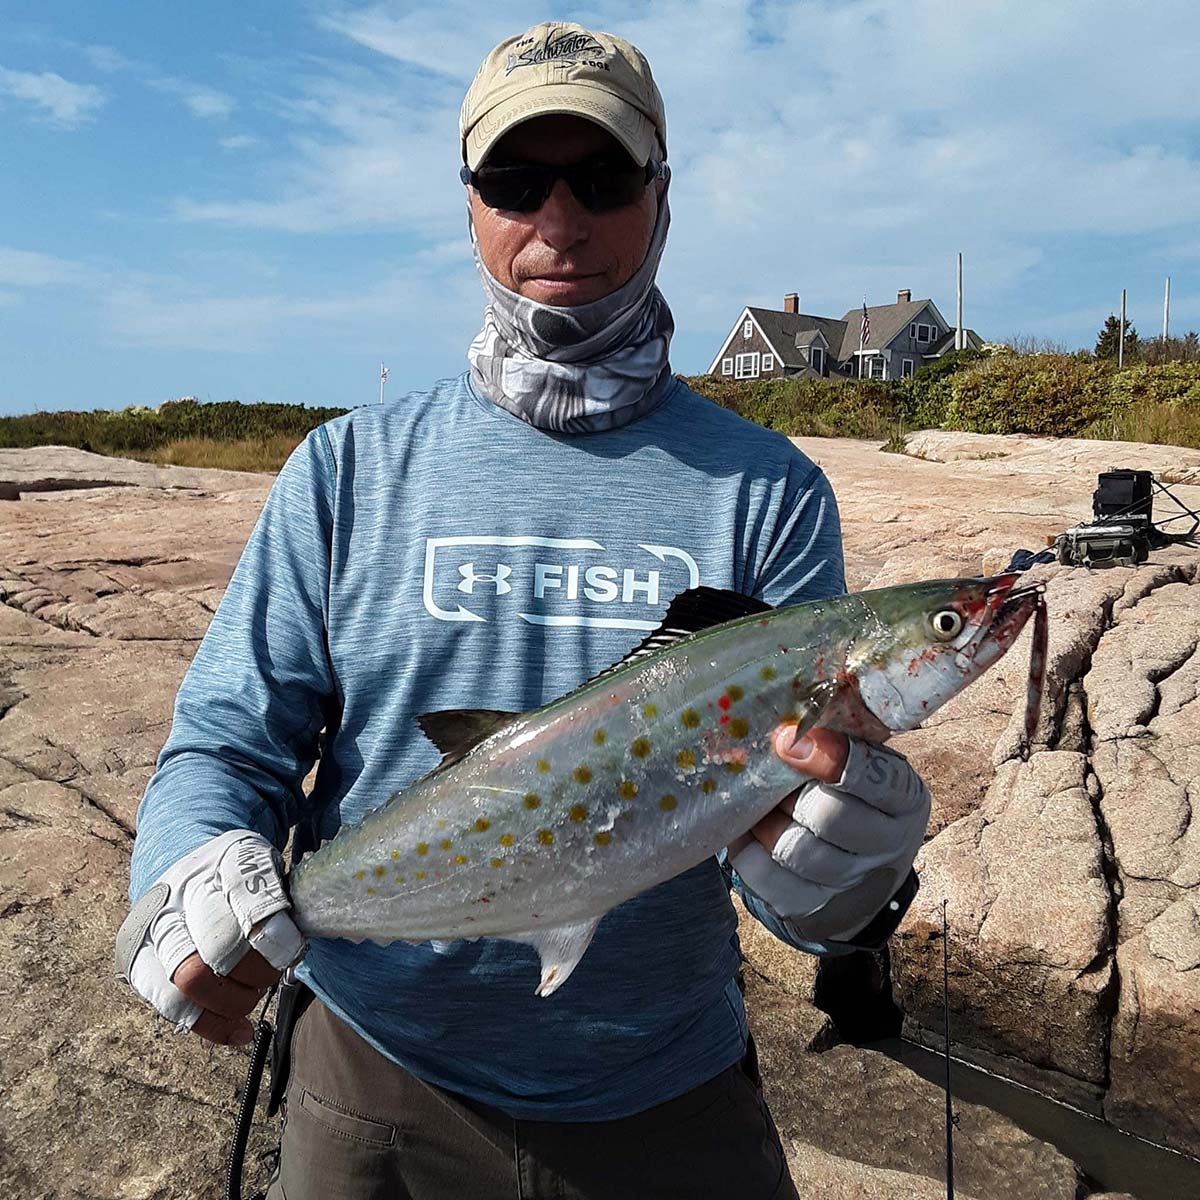 This angler holds a rare Spanish mackerel